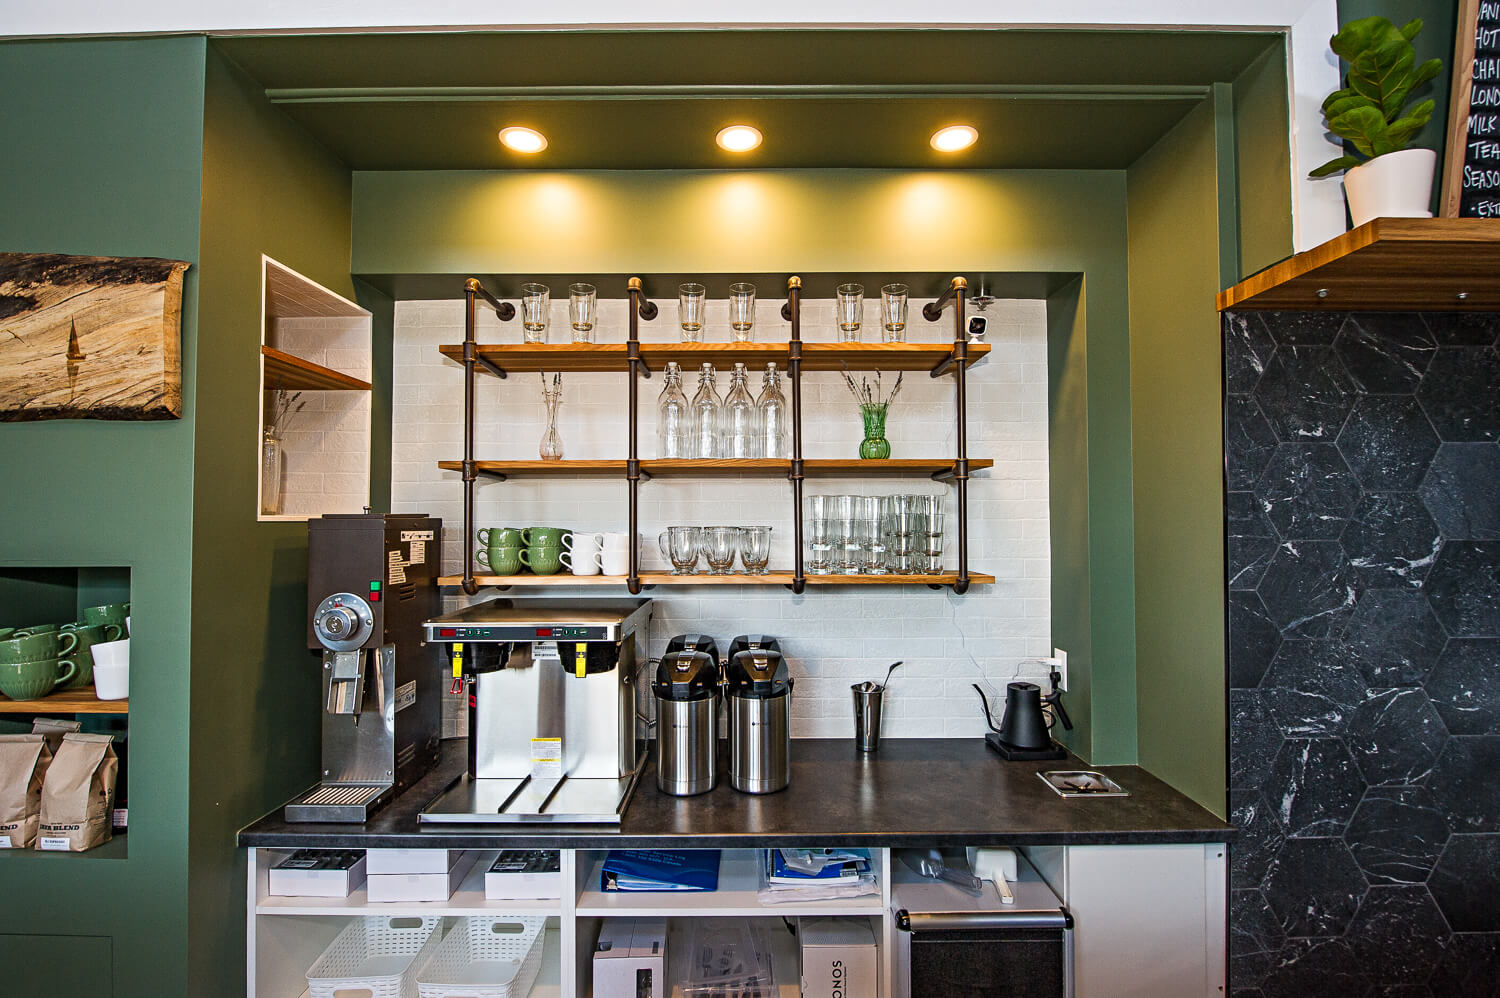 Open kitchen cafe shelves display nova scotia